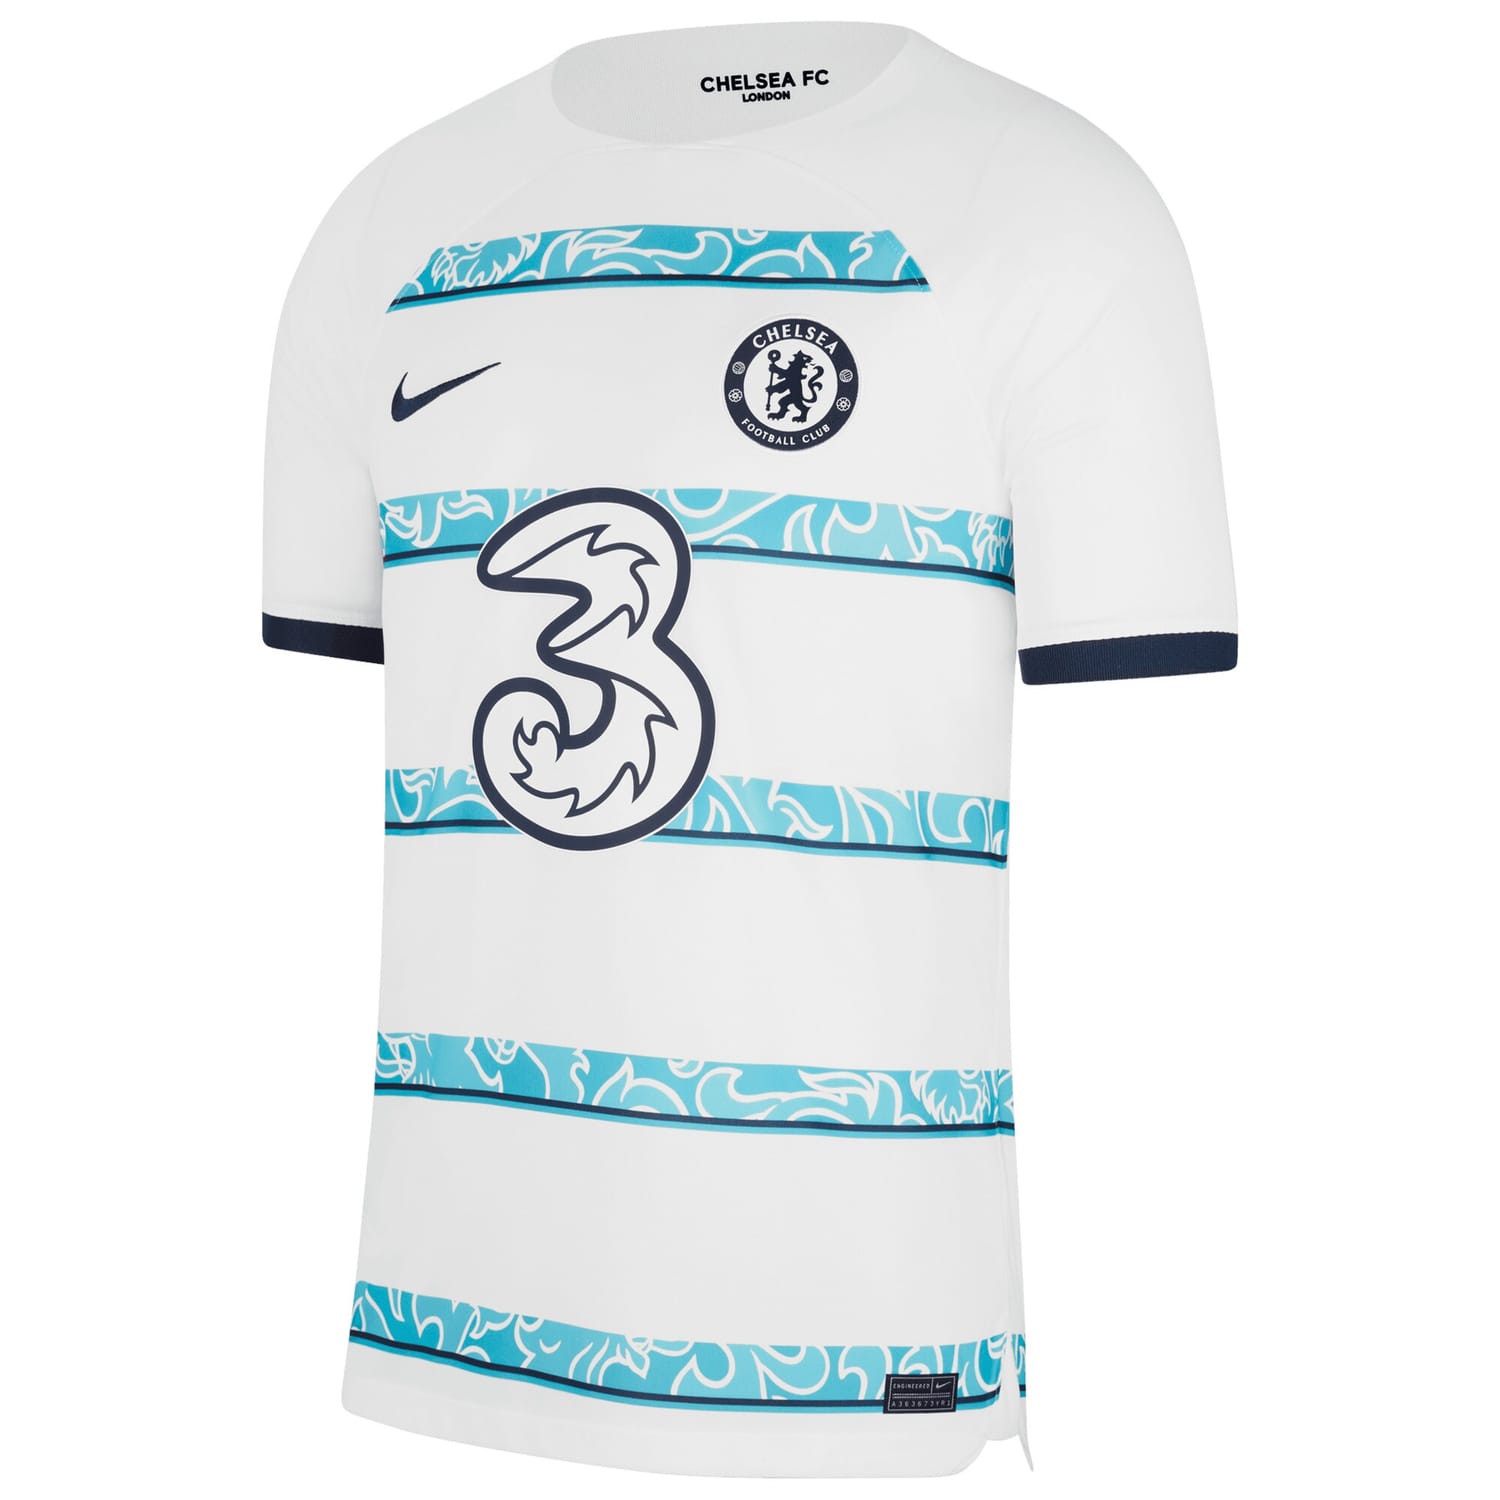 Premier League Chelsea Away Jersey Shirt 2022-23 player Mykhailo Mudryk 15 printing for Men